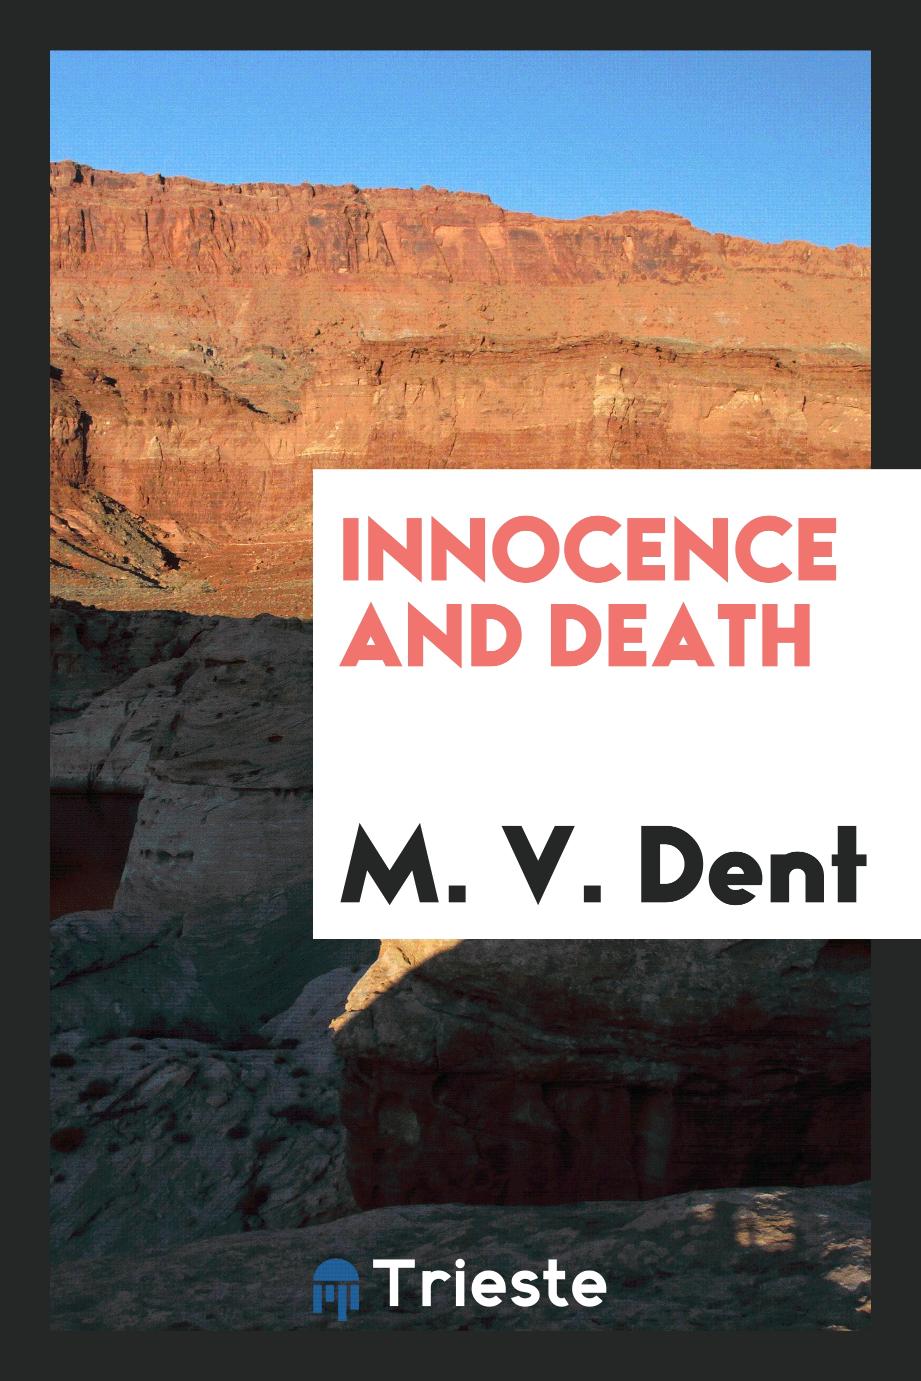 Innocence and death